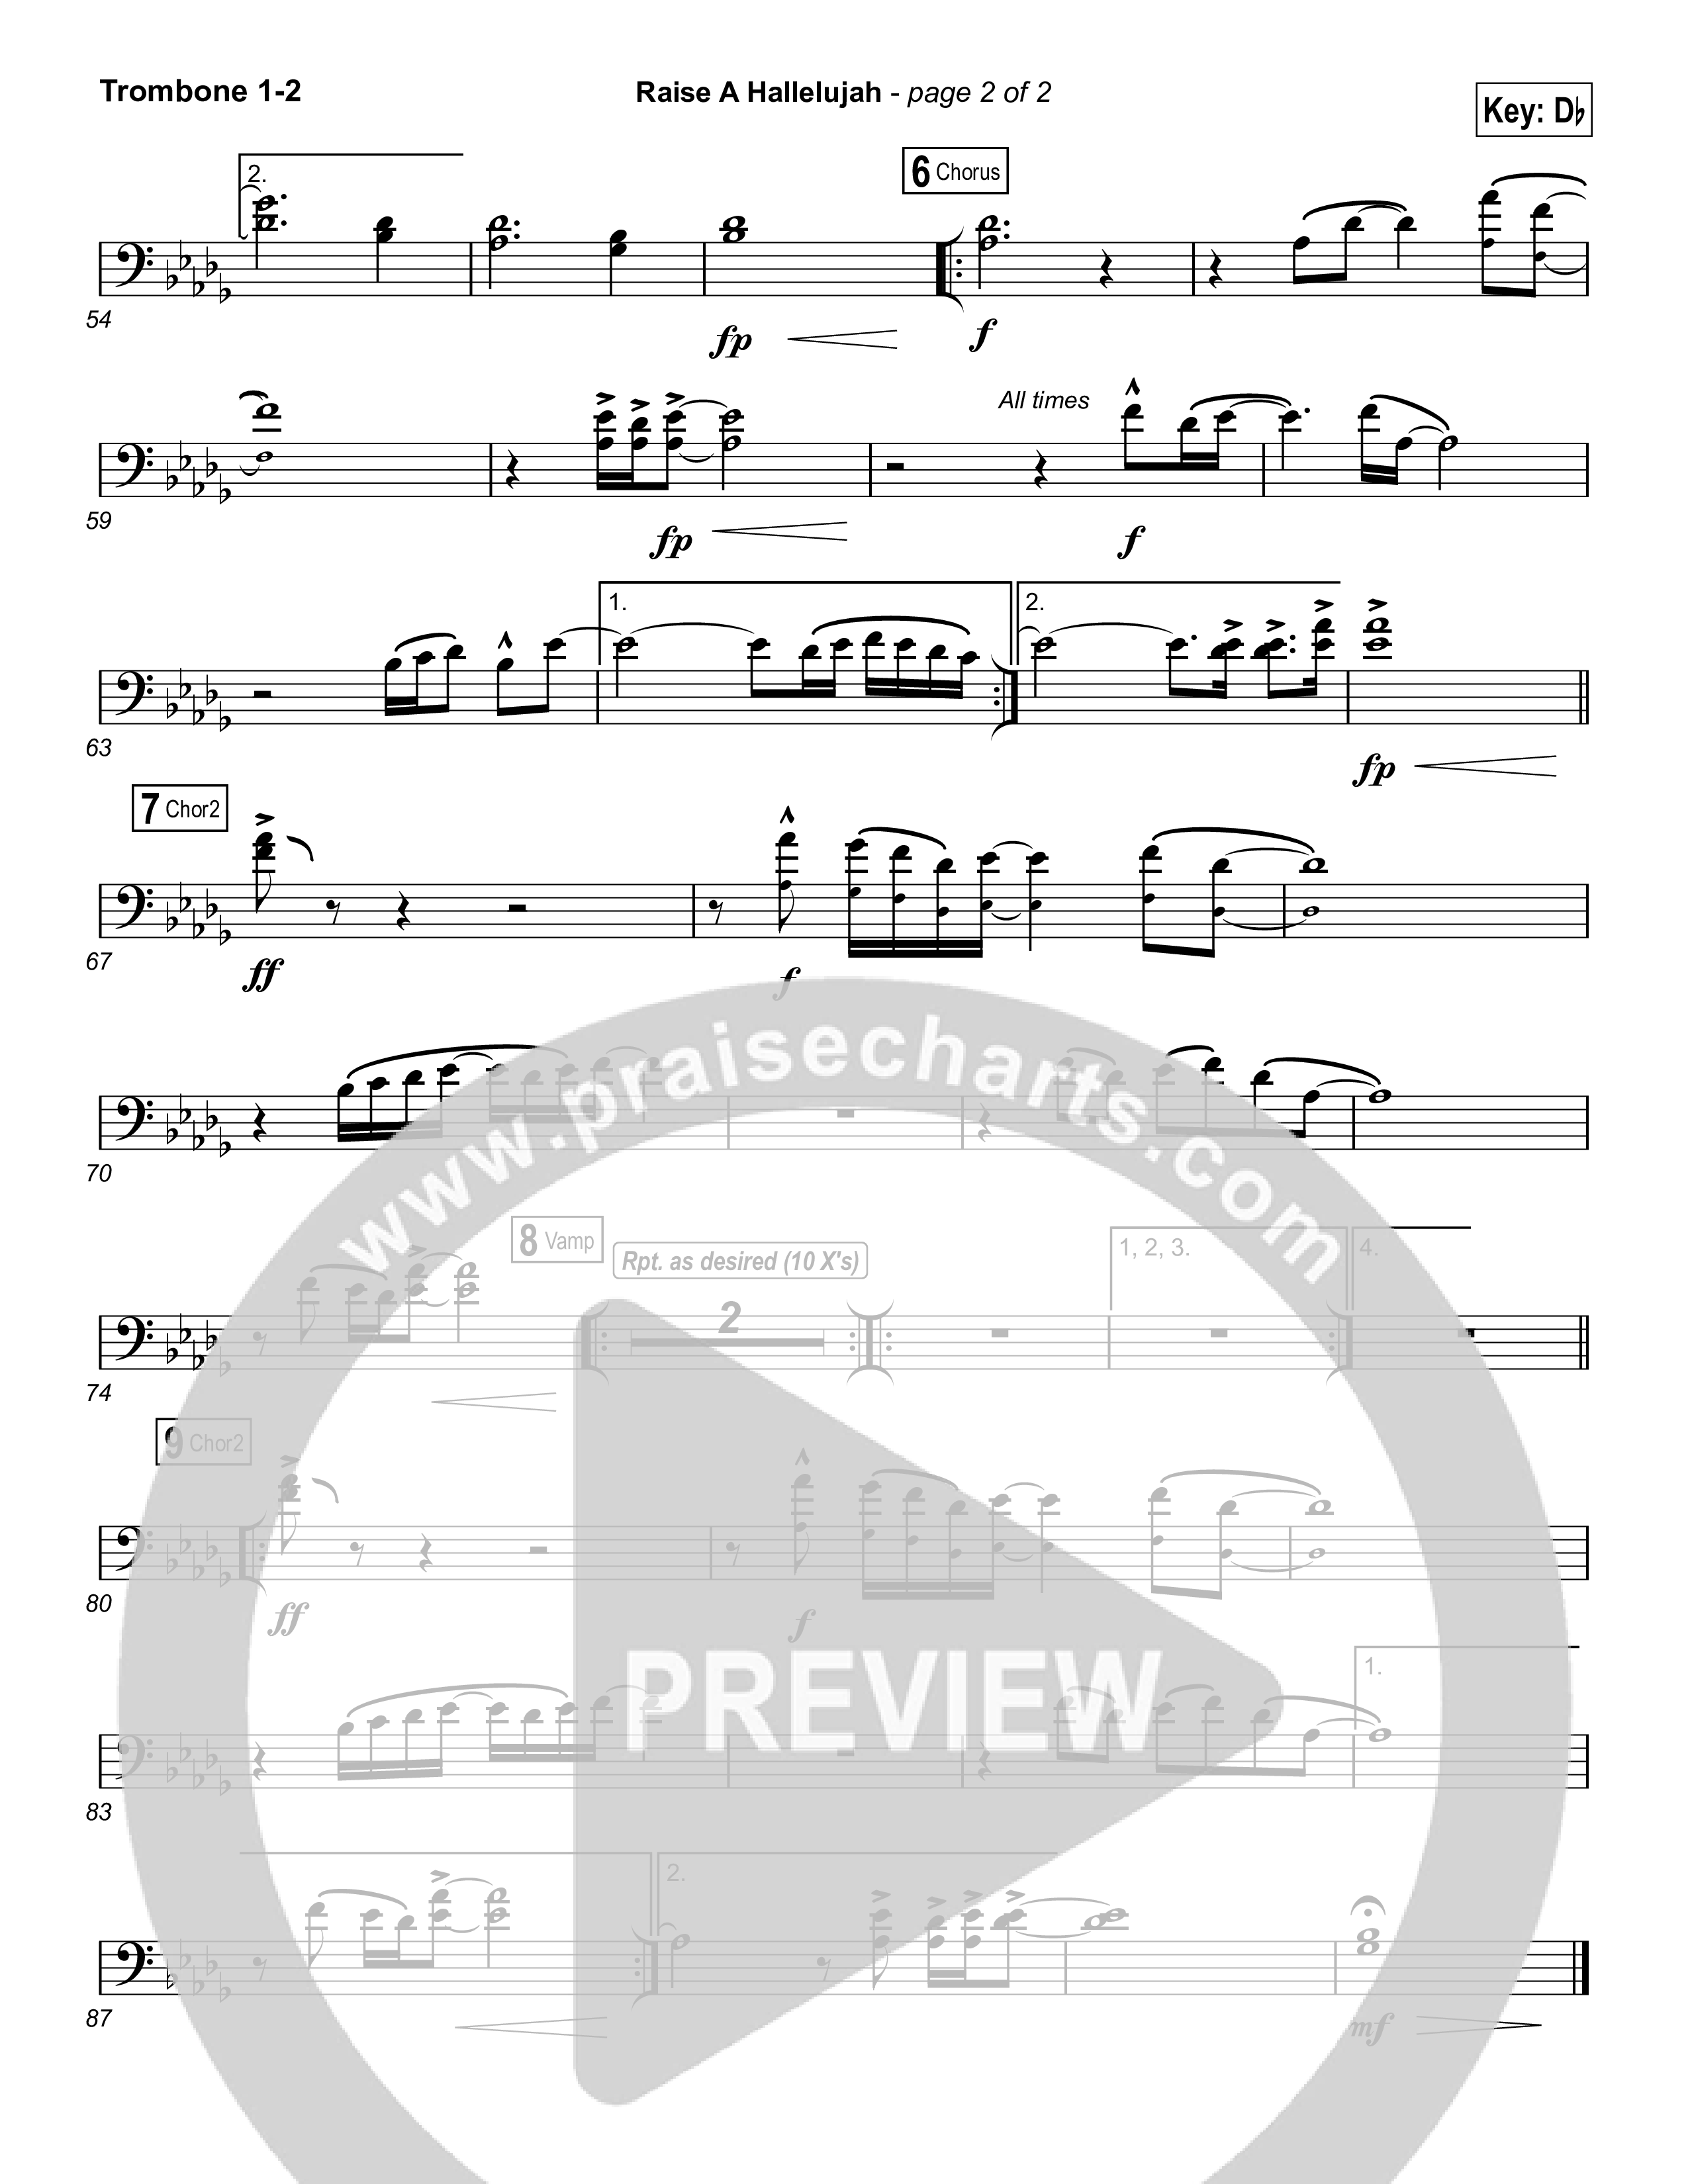 Raise A Hallelujah (Choral Anthem SATB) Trombone 1/2 (Bethel Music / Arr. Luke Gambill)